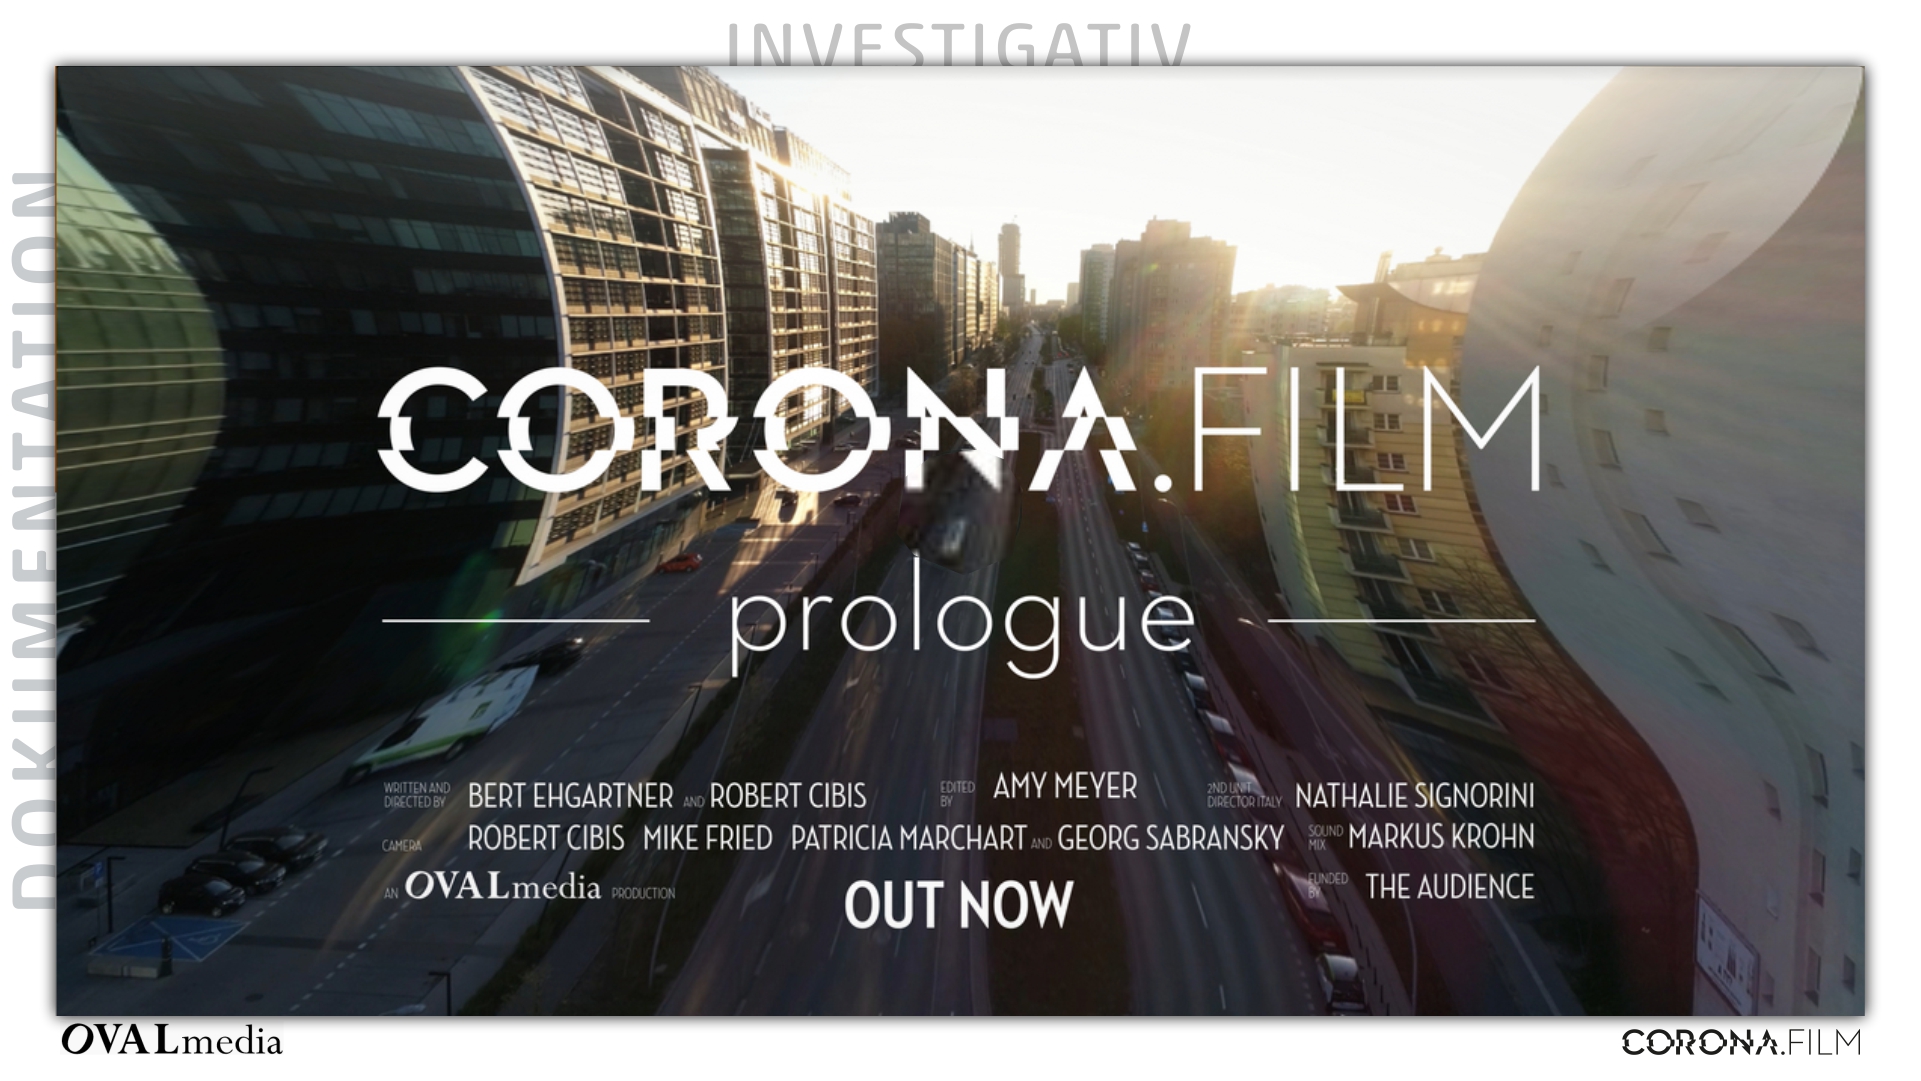 CORONA.FILM - Prologue (Dokumentation, deutsch)